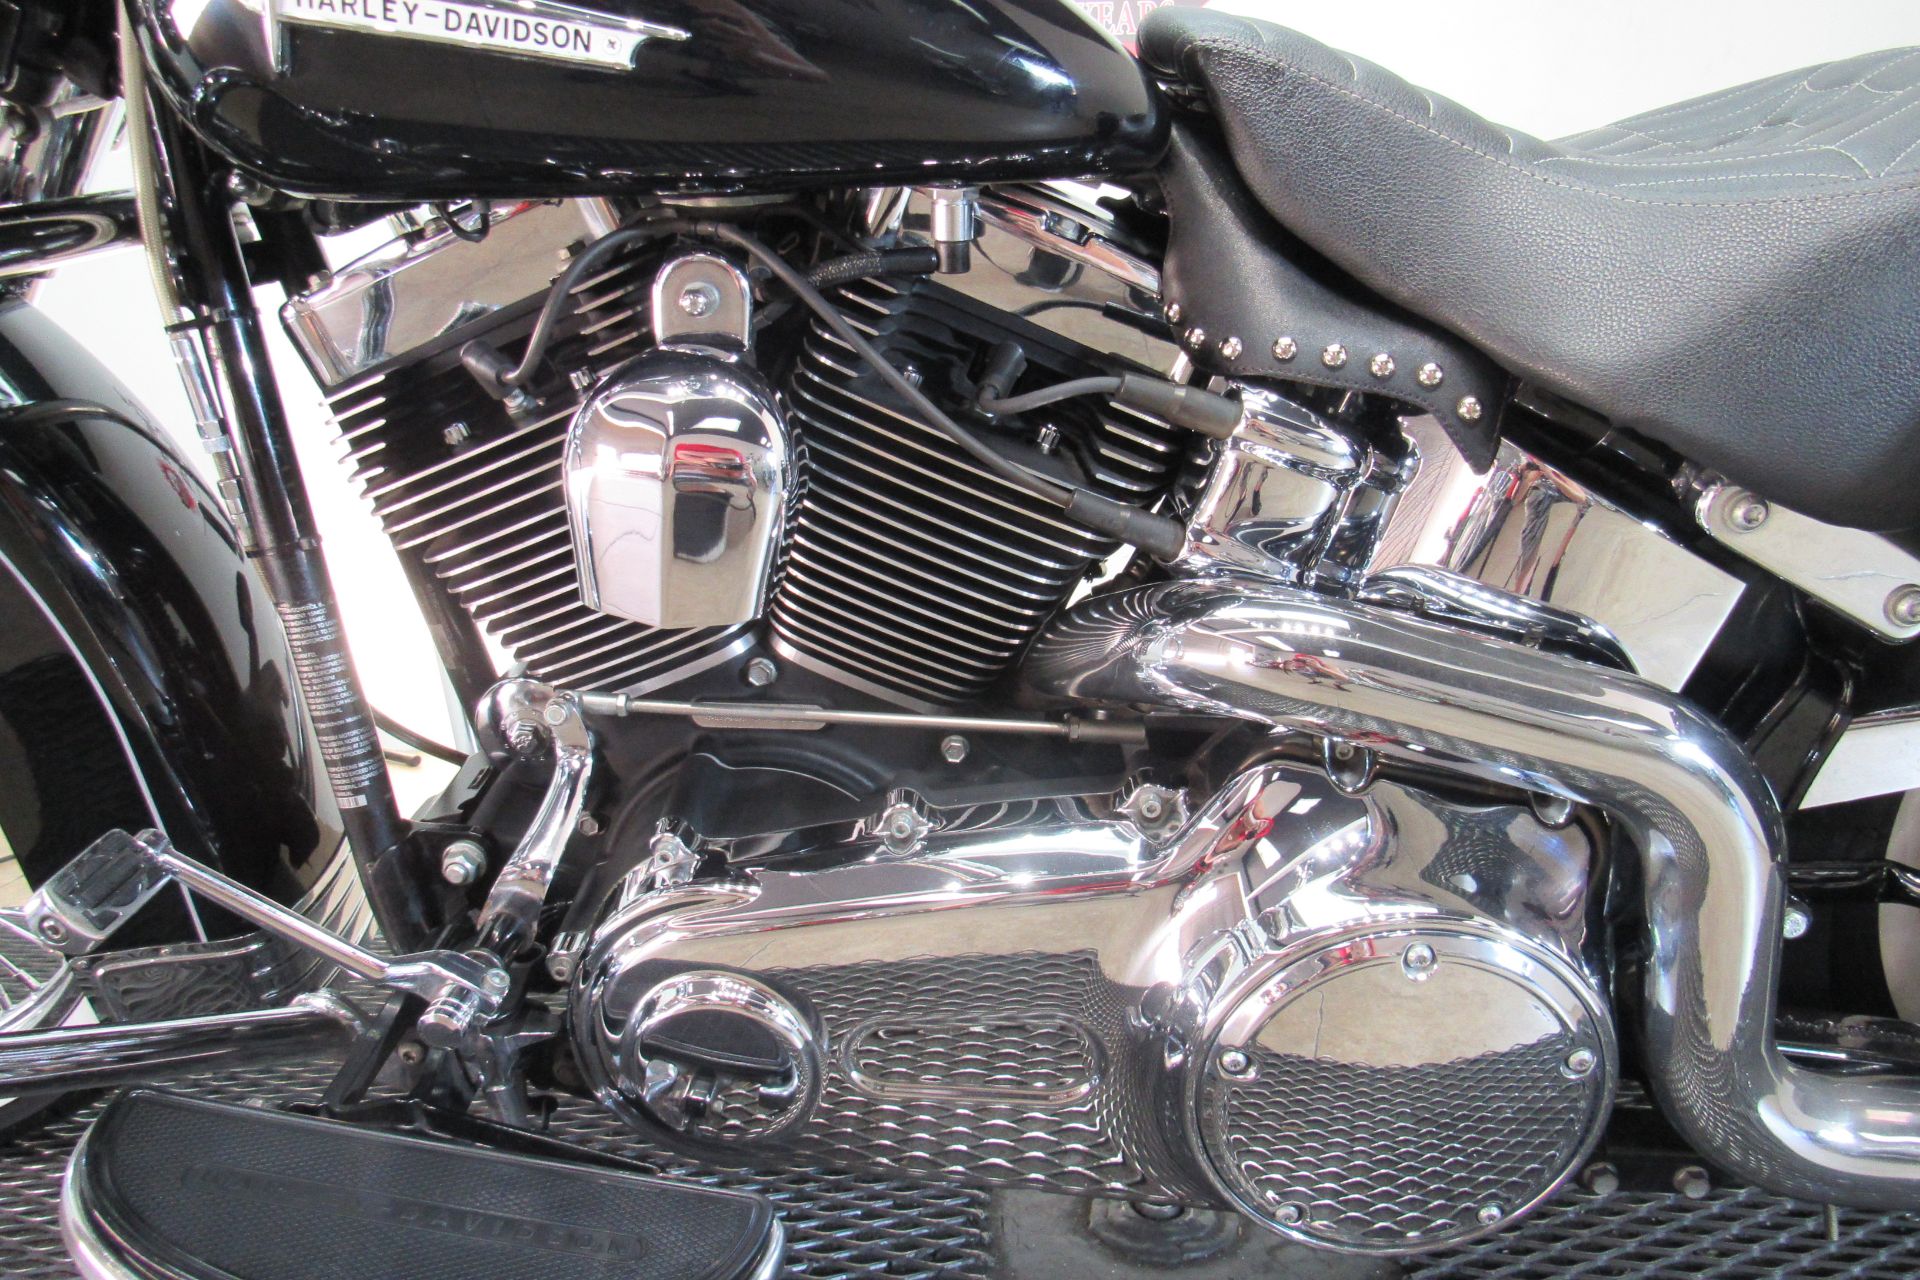 2009 Harley-Davidson Heritage Softail® Classic in Temecula, California - Photo 20